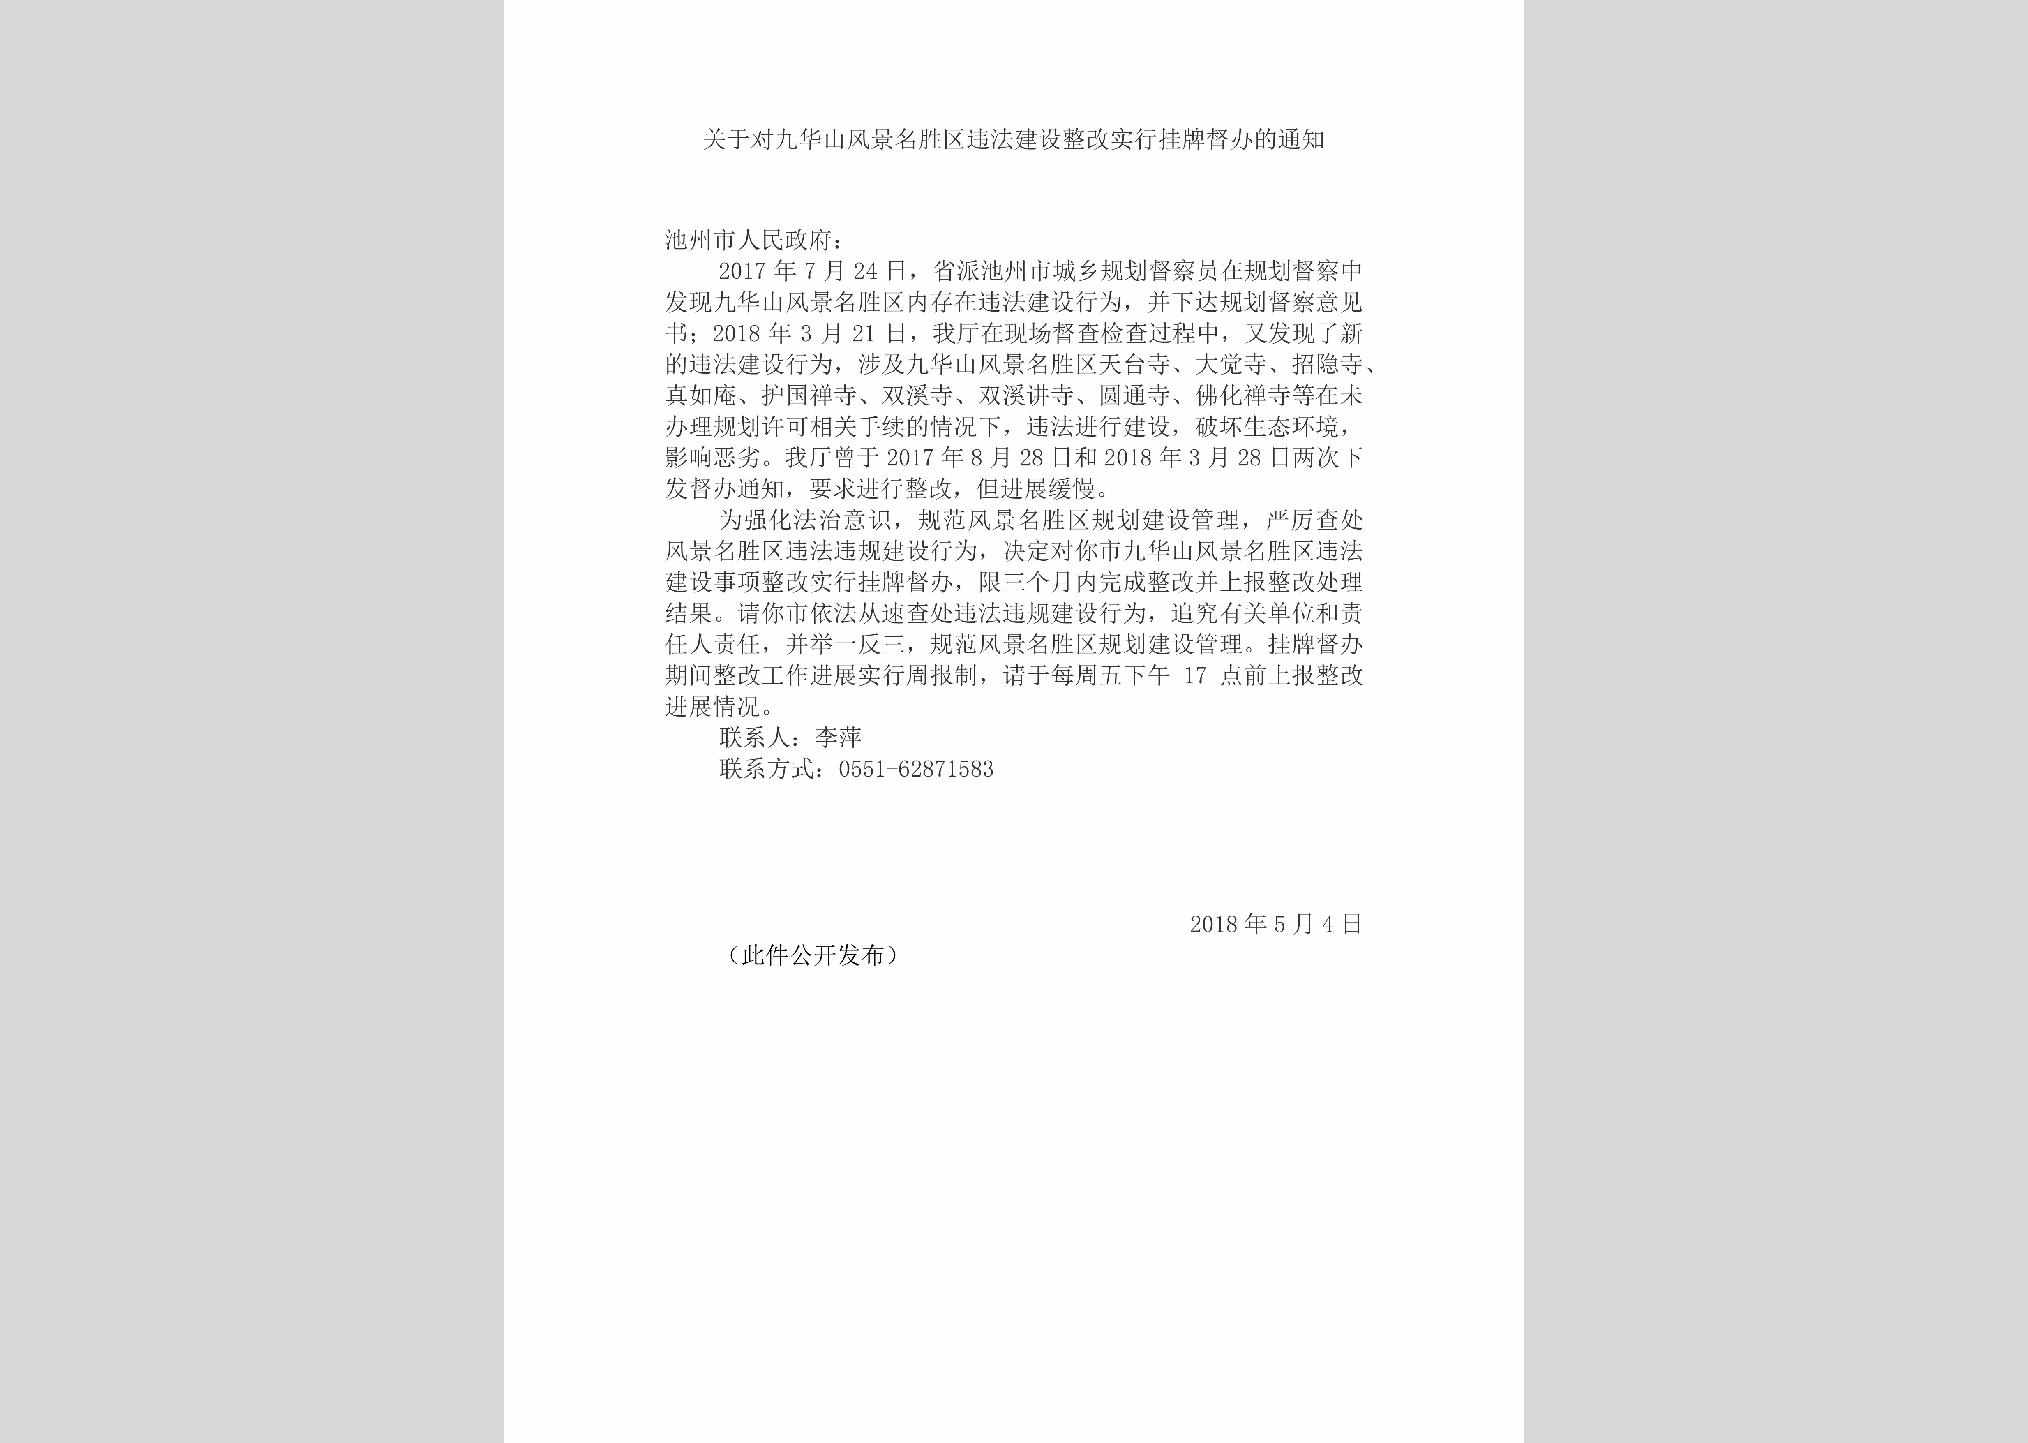 AH-DJLSJSZG-2018：关于对九华山风景名胜区违法建设整改实行挂牌督办的通知